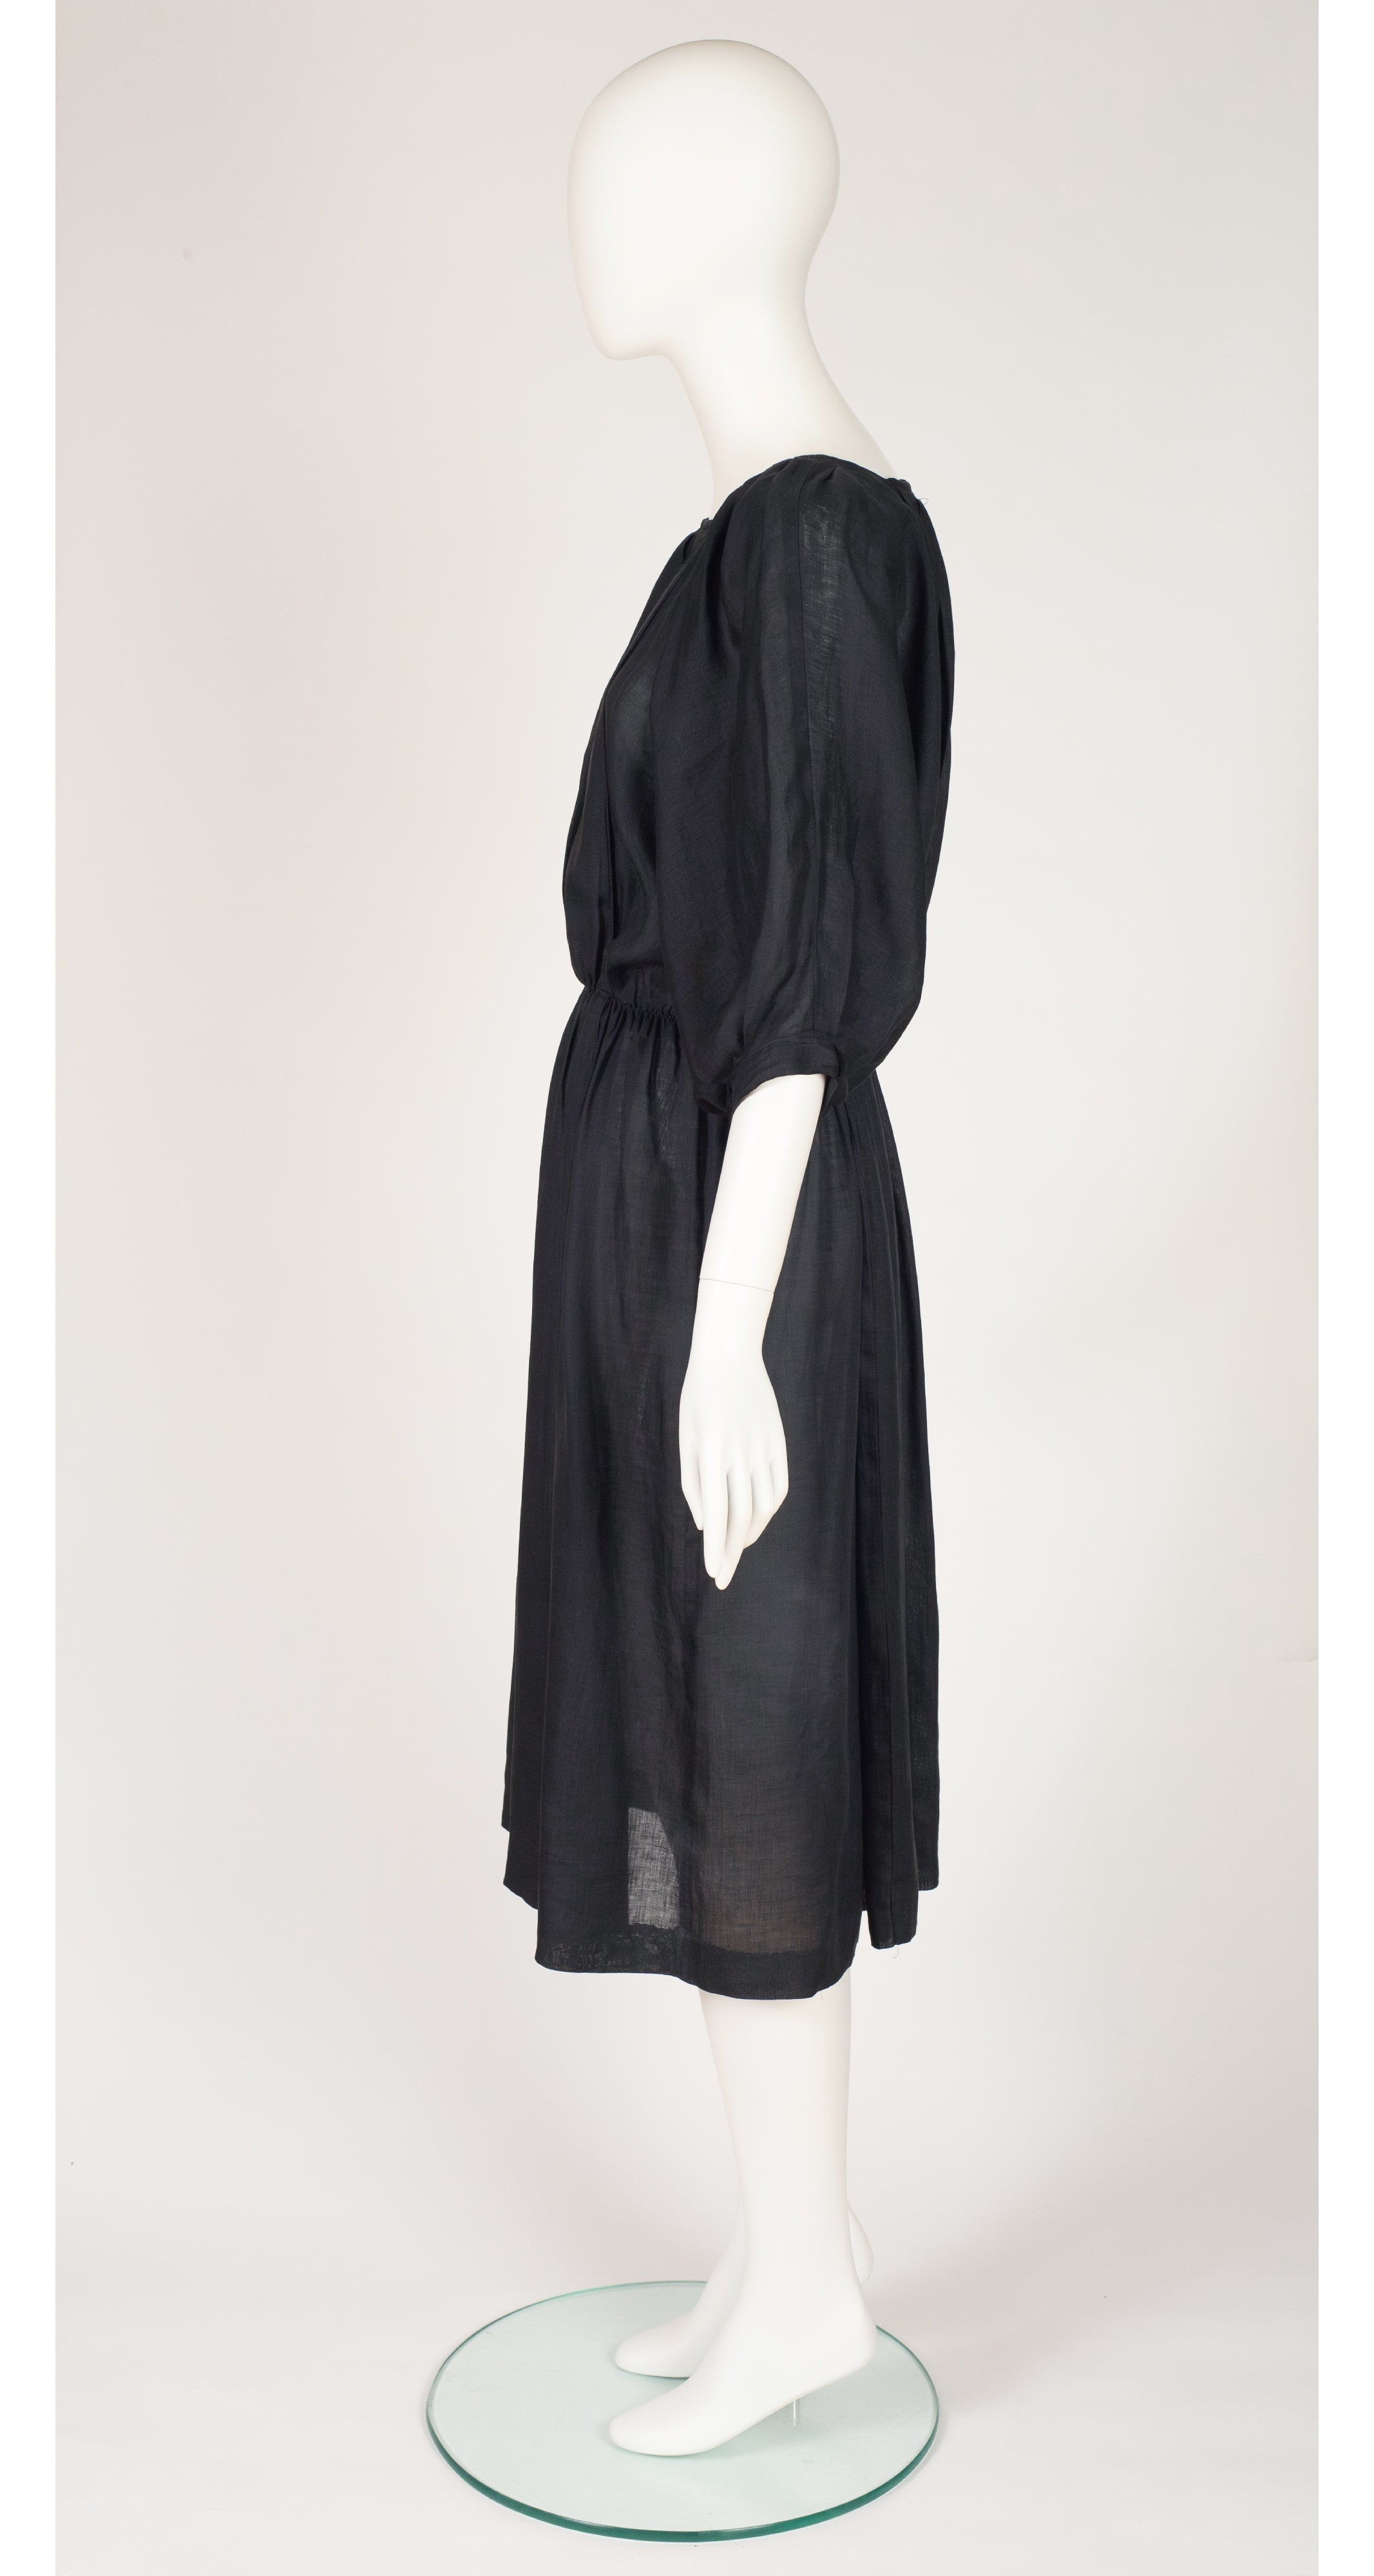 1980s Black Linen Pleated Blouson Dress